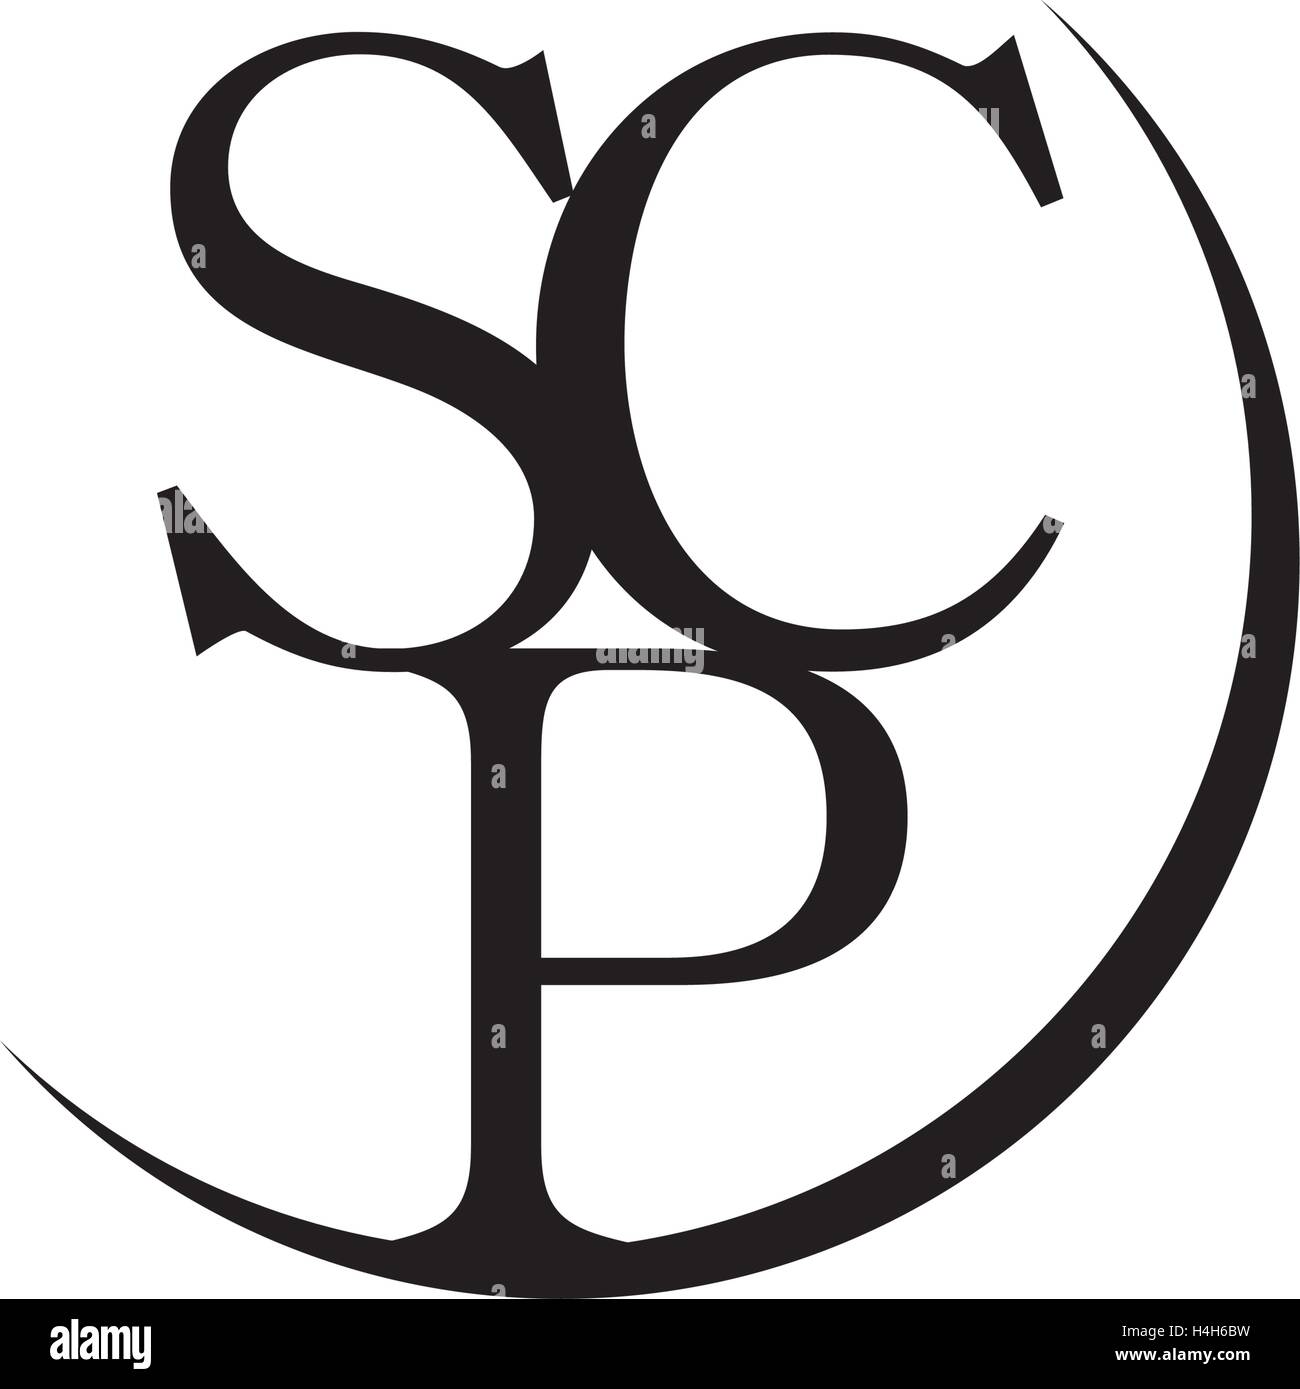 Black and White SCP Logo Design, Stock vector